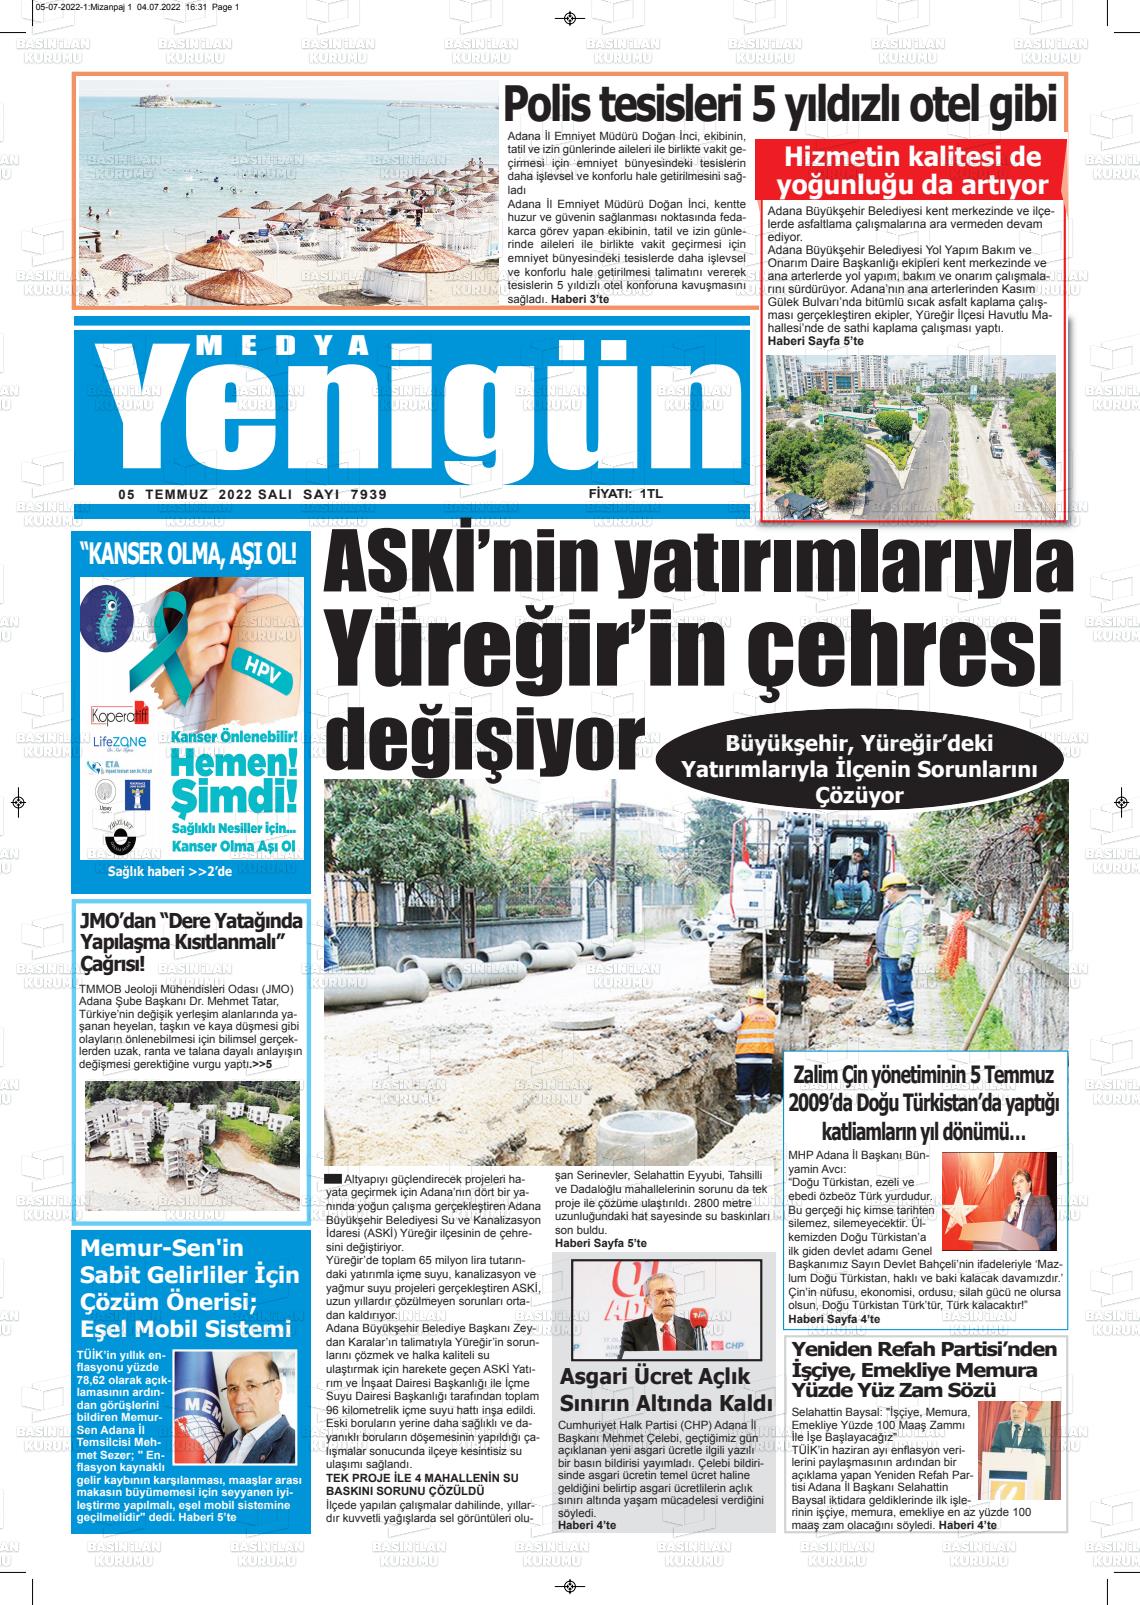 05 Temmuz 2022 Medya Yenigün Gazete Manşeti